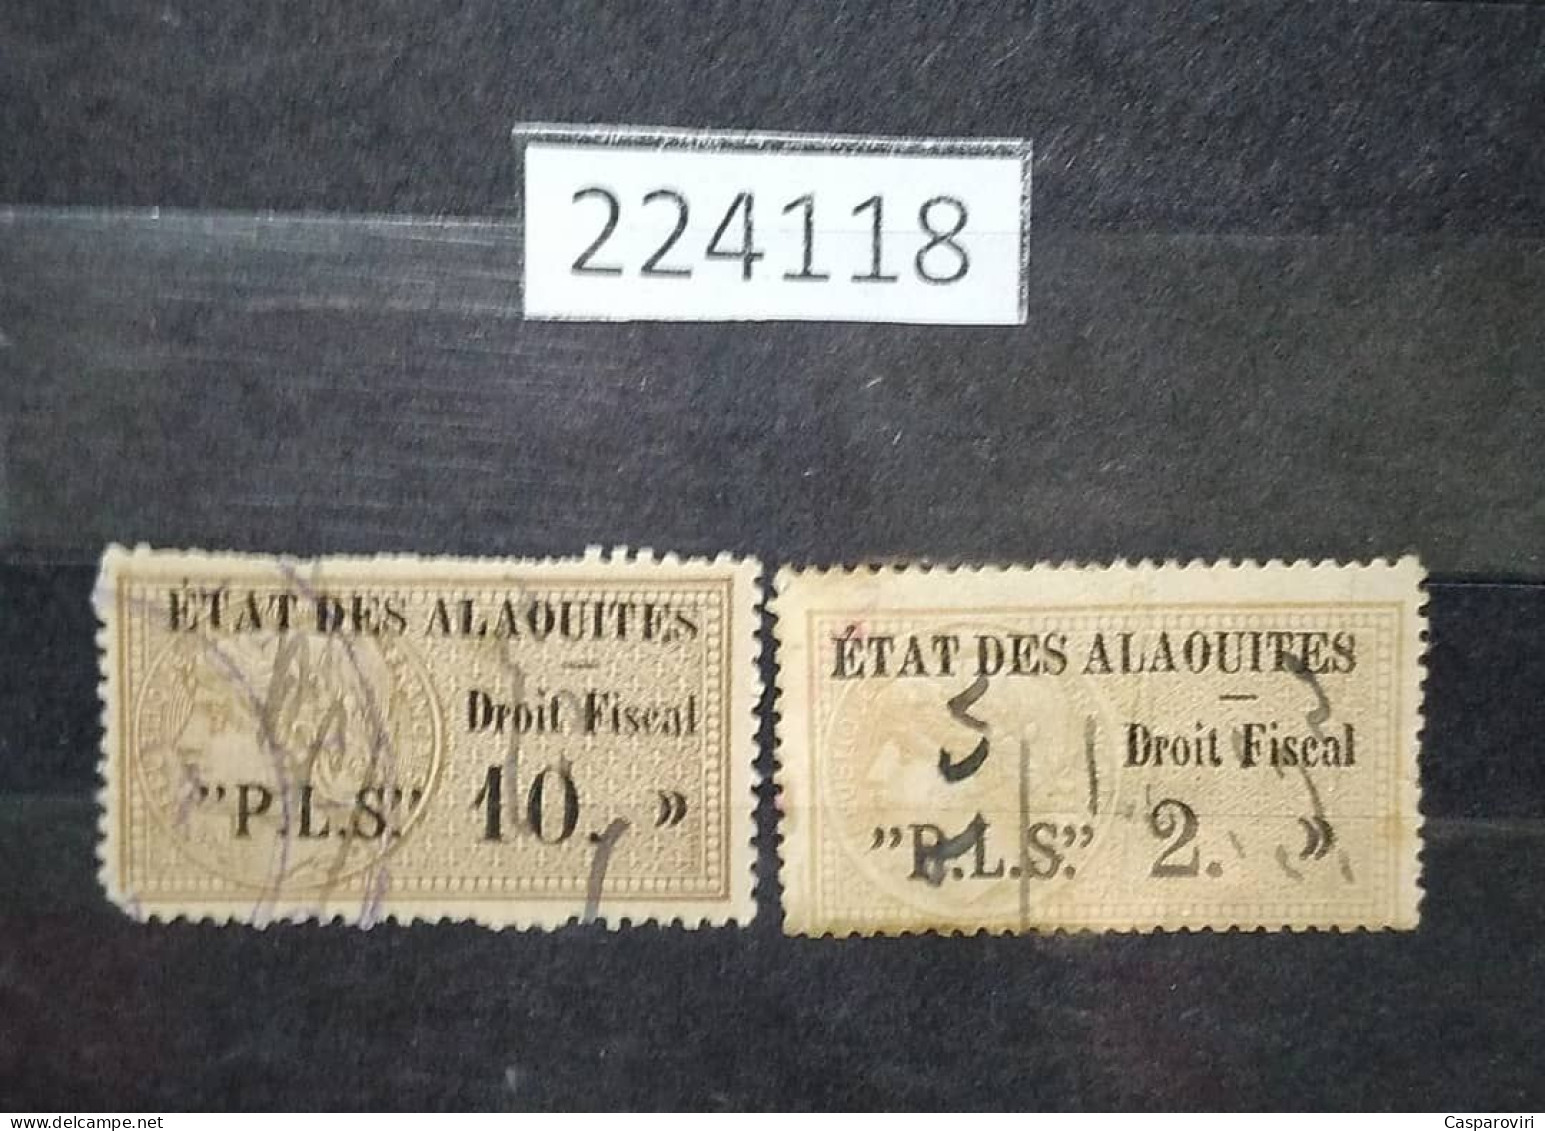 224118; French Colonies; Etat Des Alaouites; 2 Revenue French Stamps 2, 10 P ;Black Overprint Droit Fiscal; USED - Usati